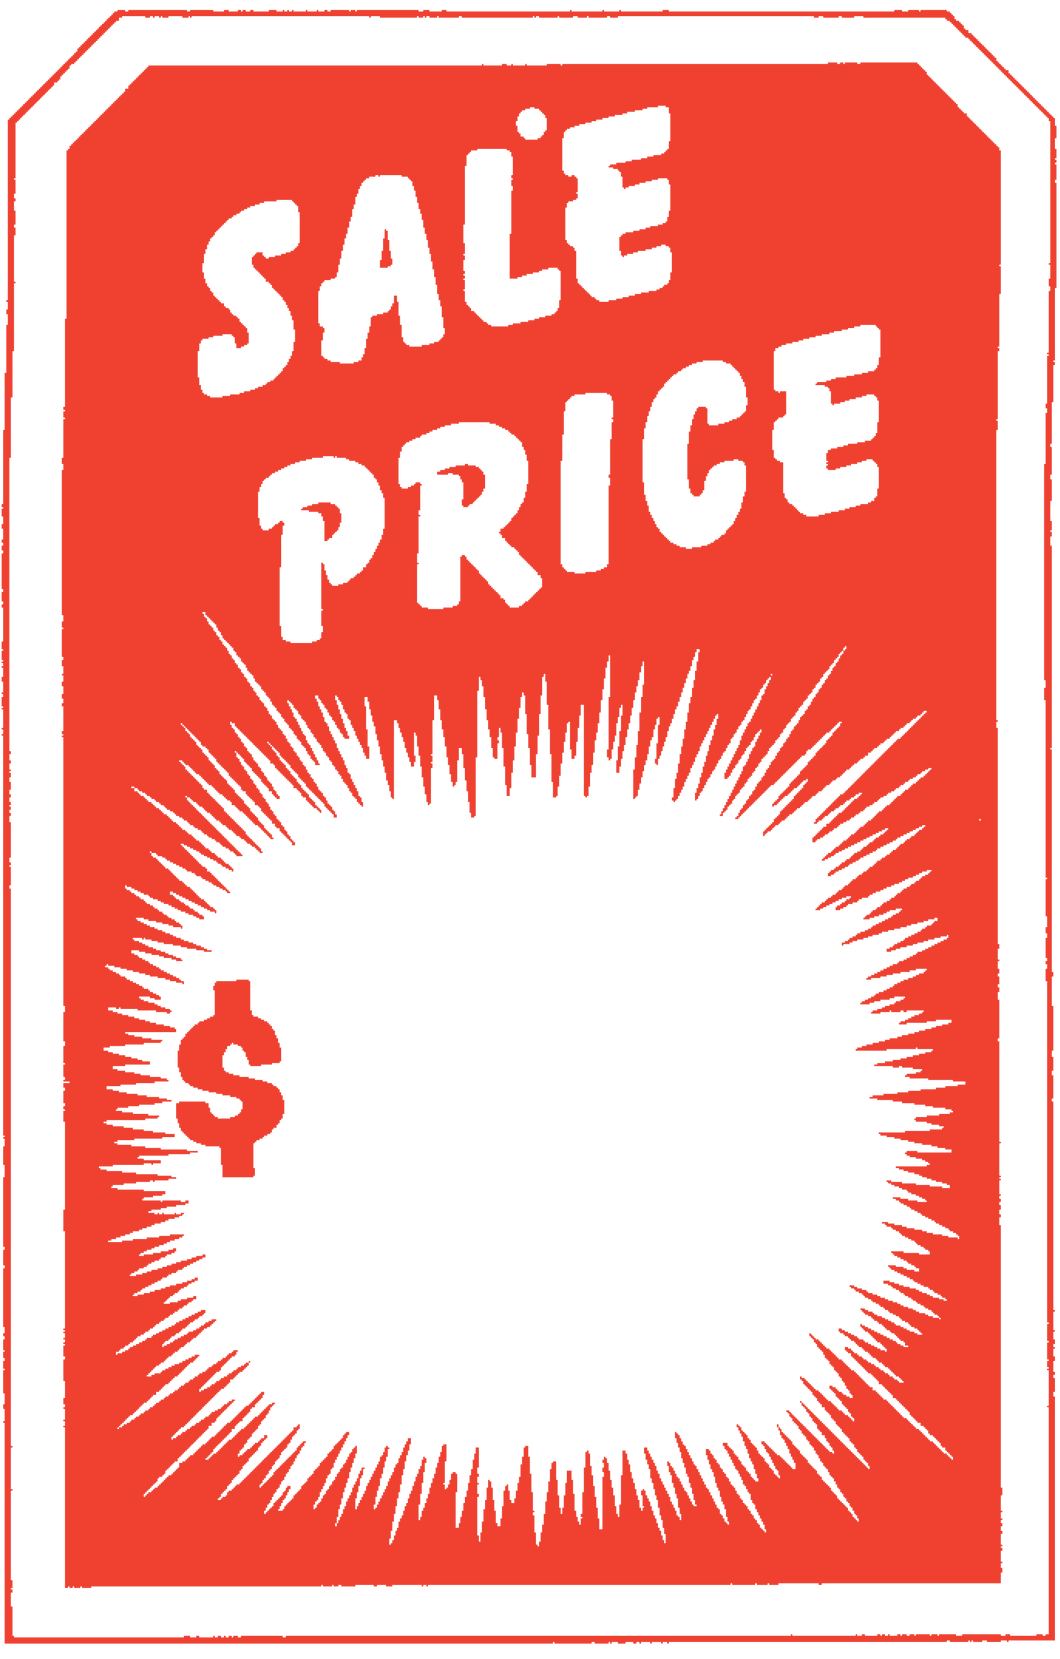 705 Sale Price